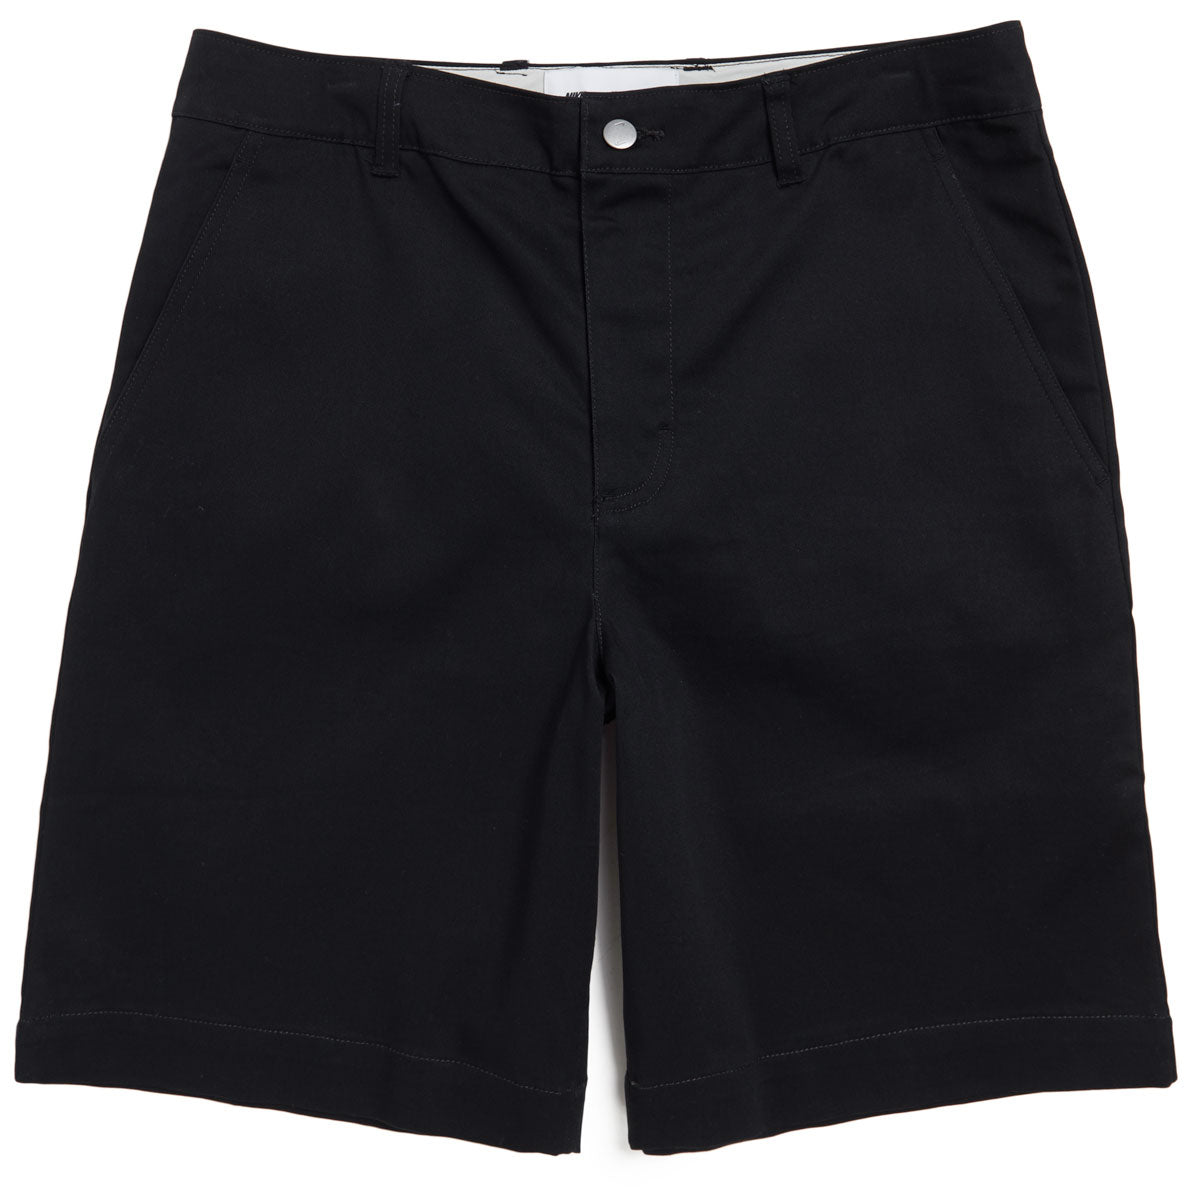 Nike SB El Chino Shorts - Black image 1